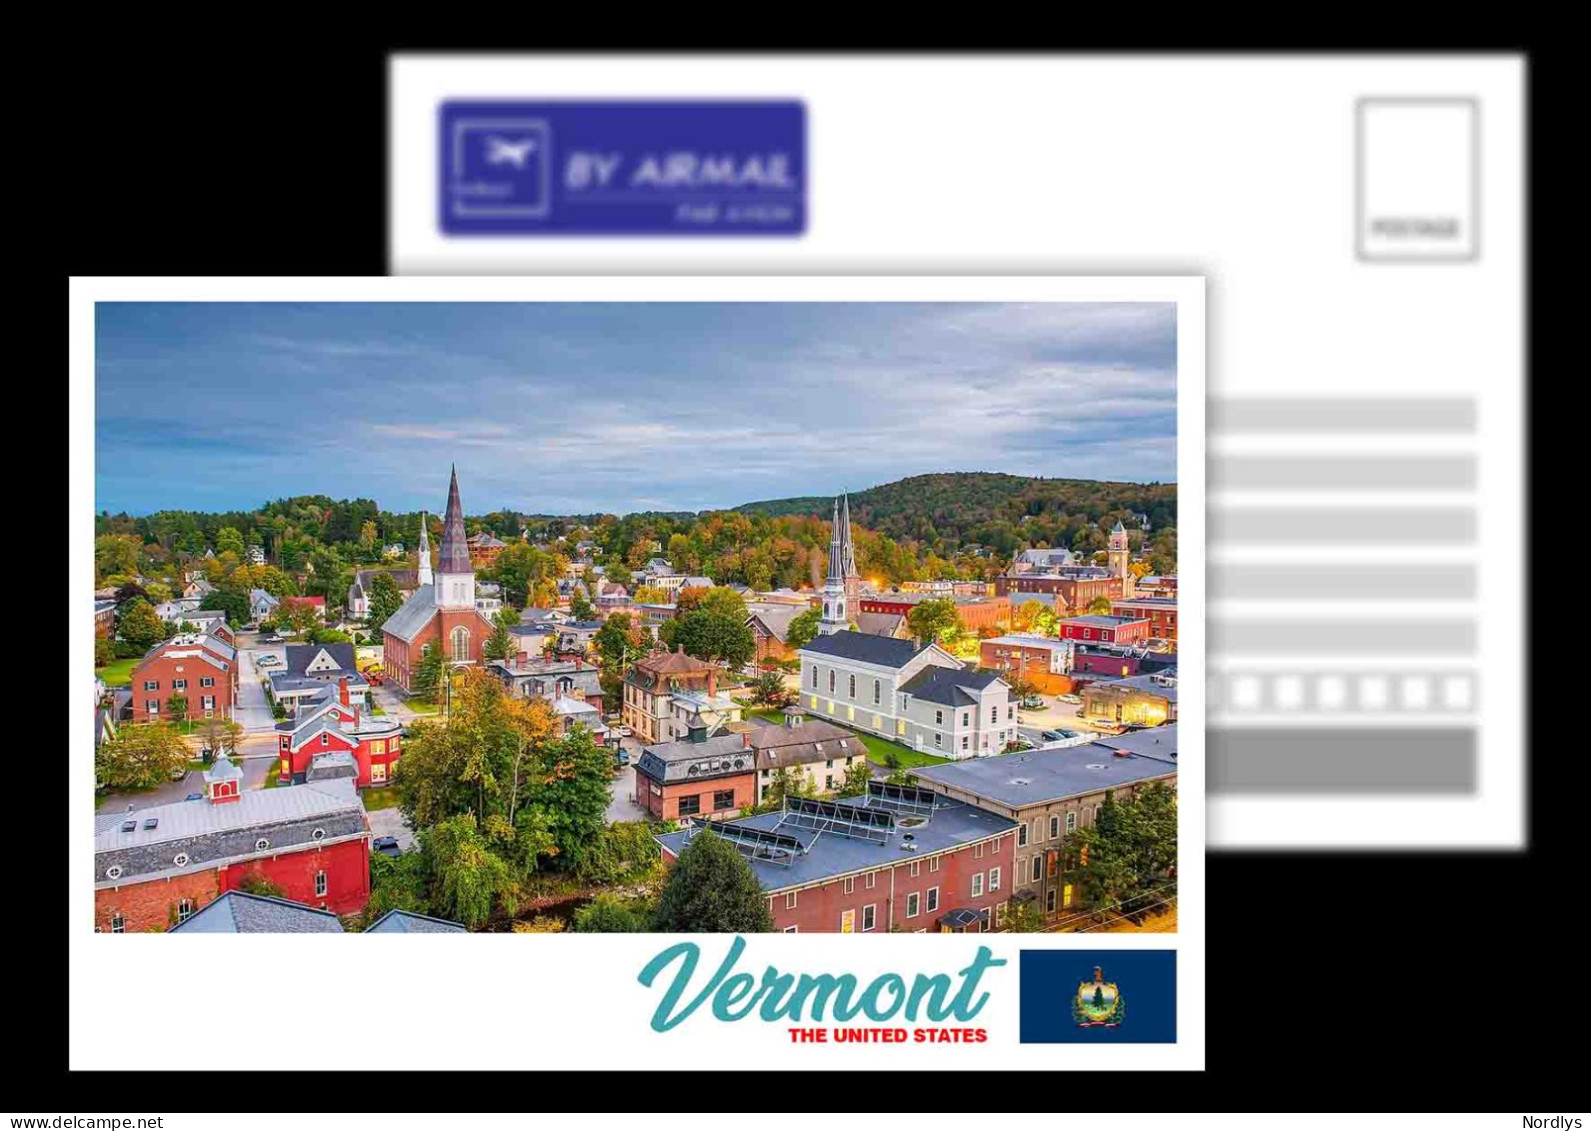 Vermont / US States / View Card - Montpelier